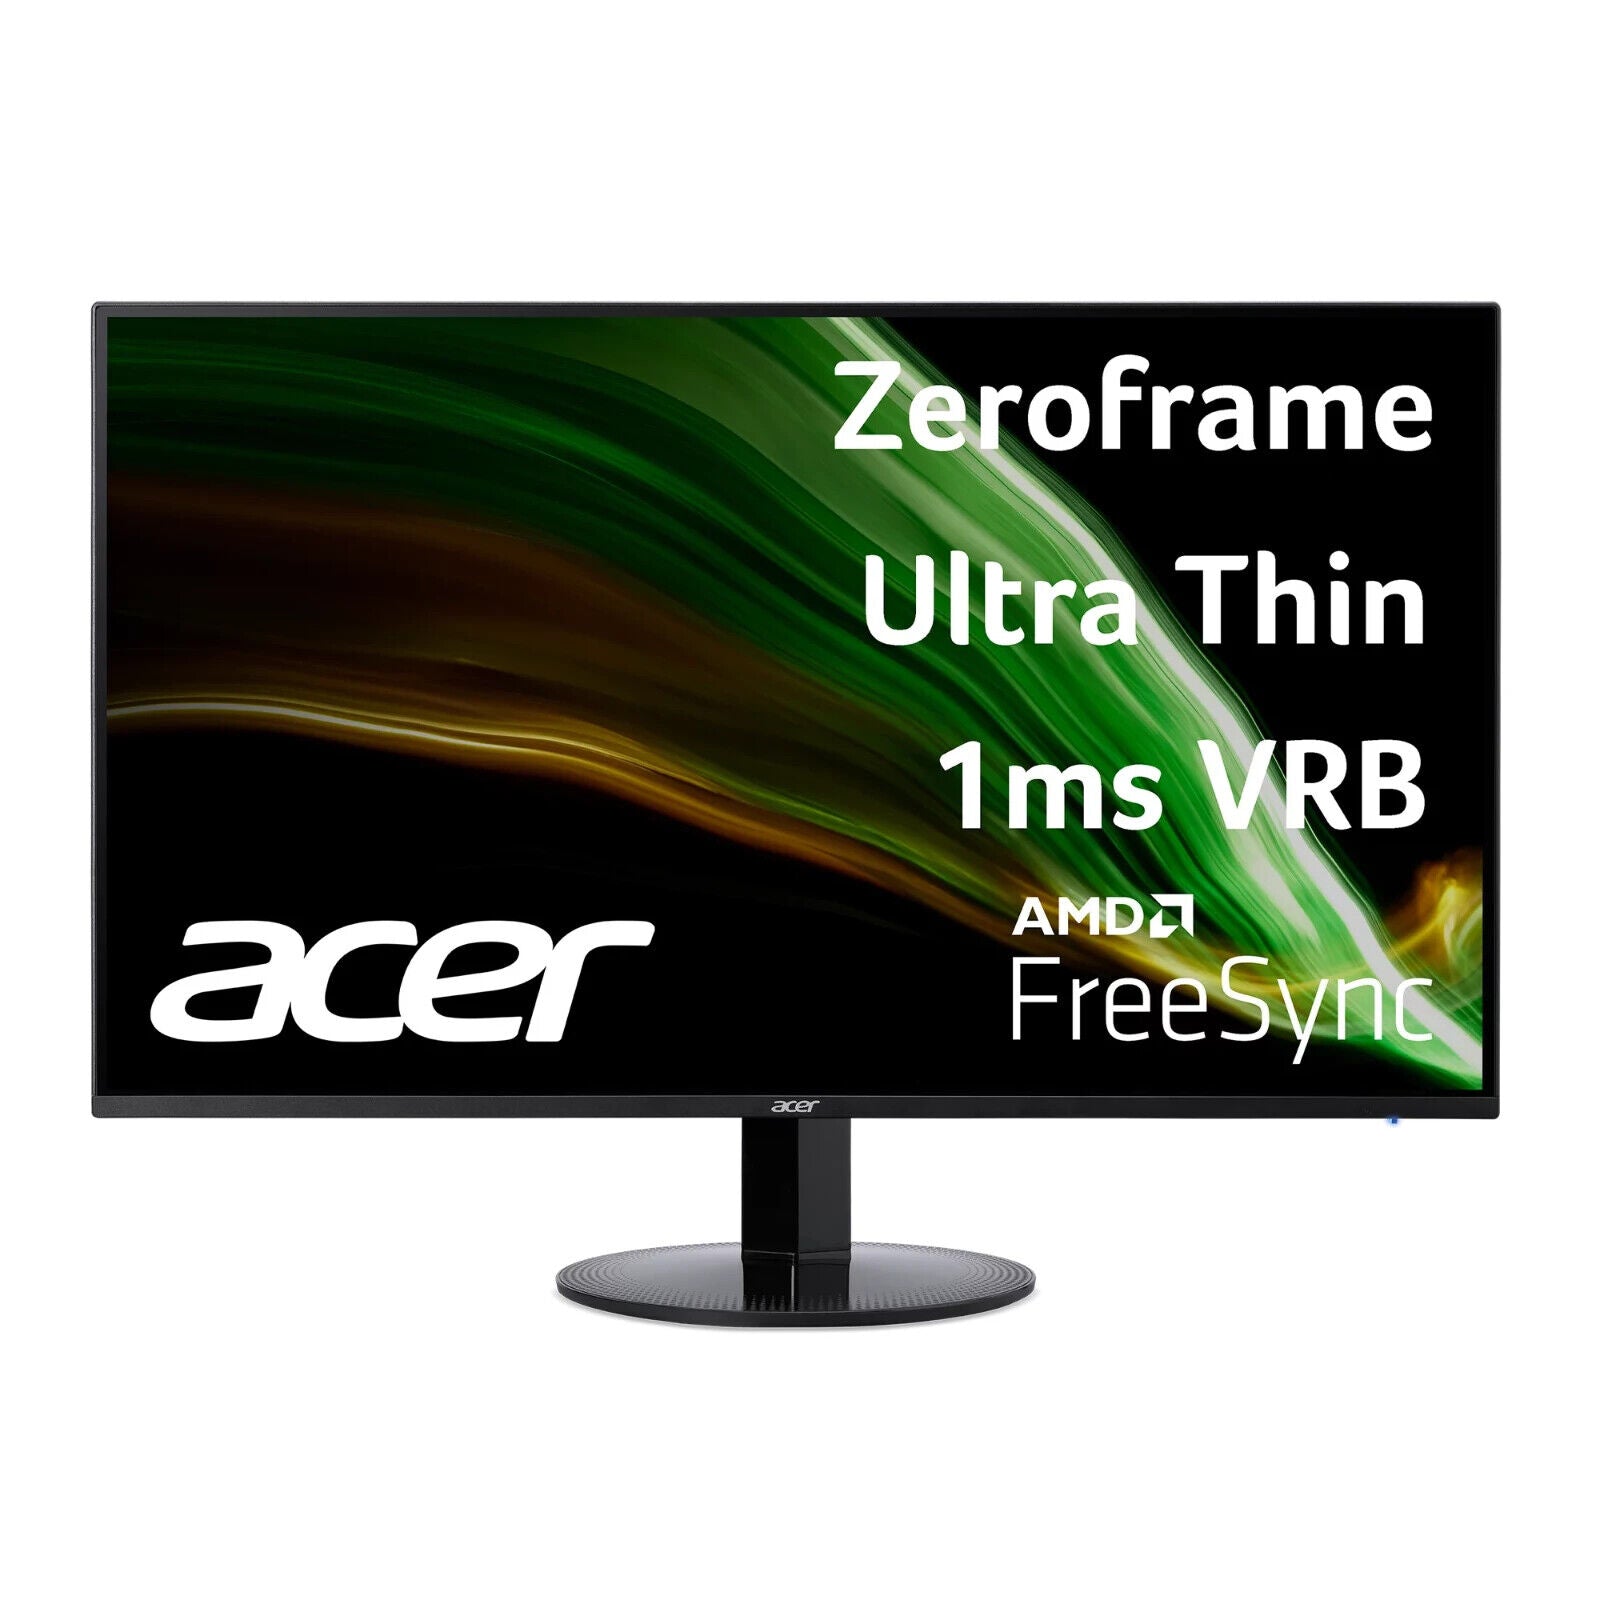 Acer 24” FHD Ultra-Thin IPS Monitor w/ AMD FreeSync, 75Hz, 1920x1080 FHD Res 1ms